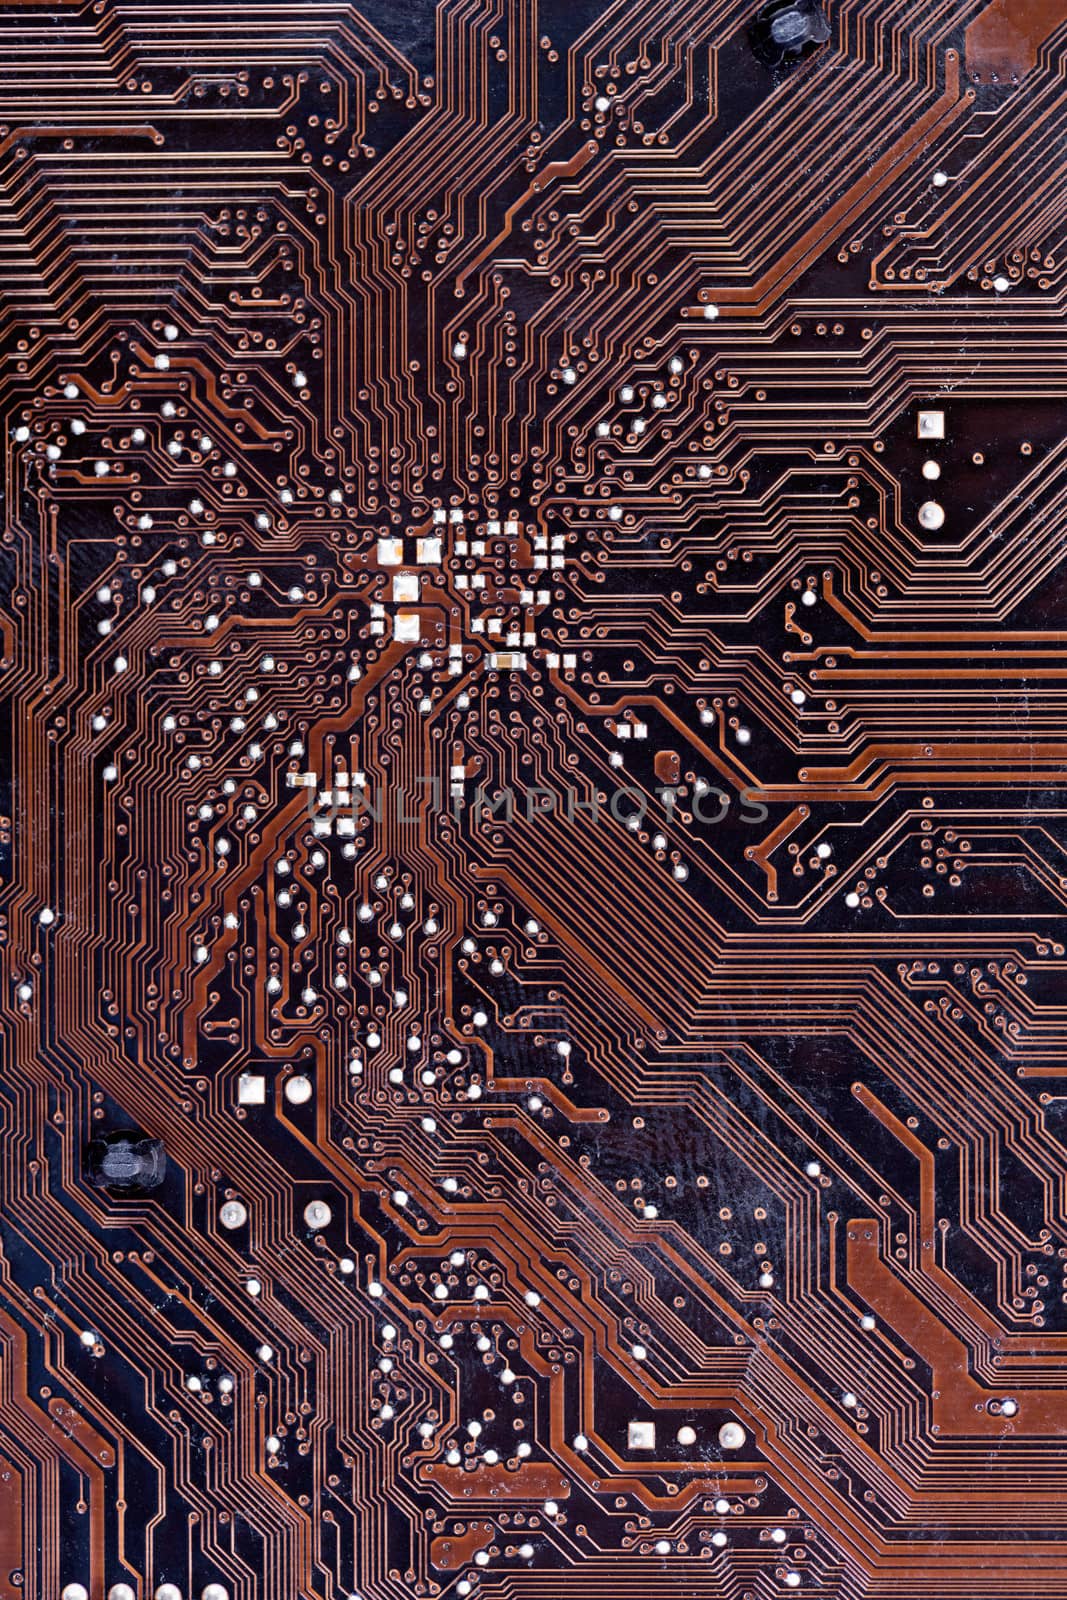 A close up shot of a computer motherboard.